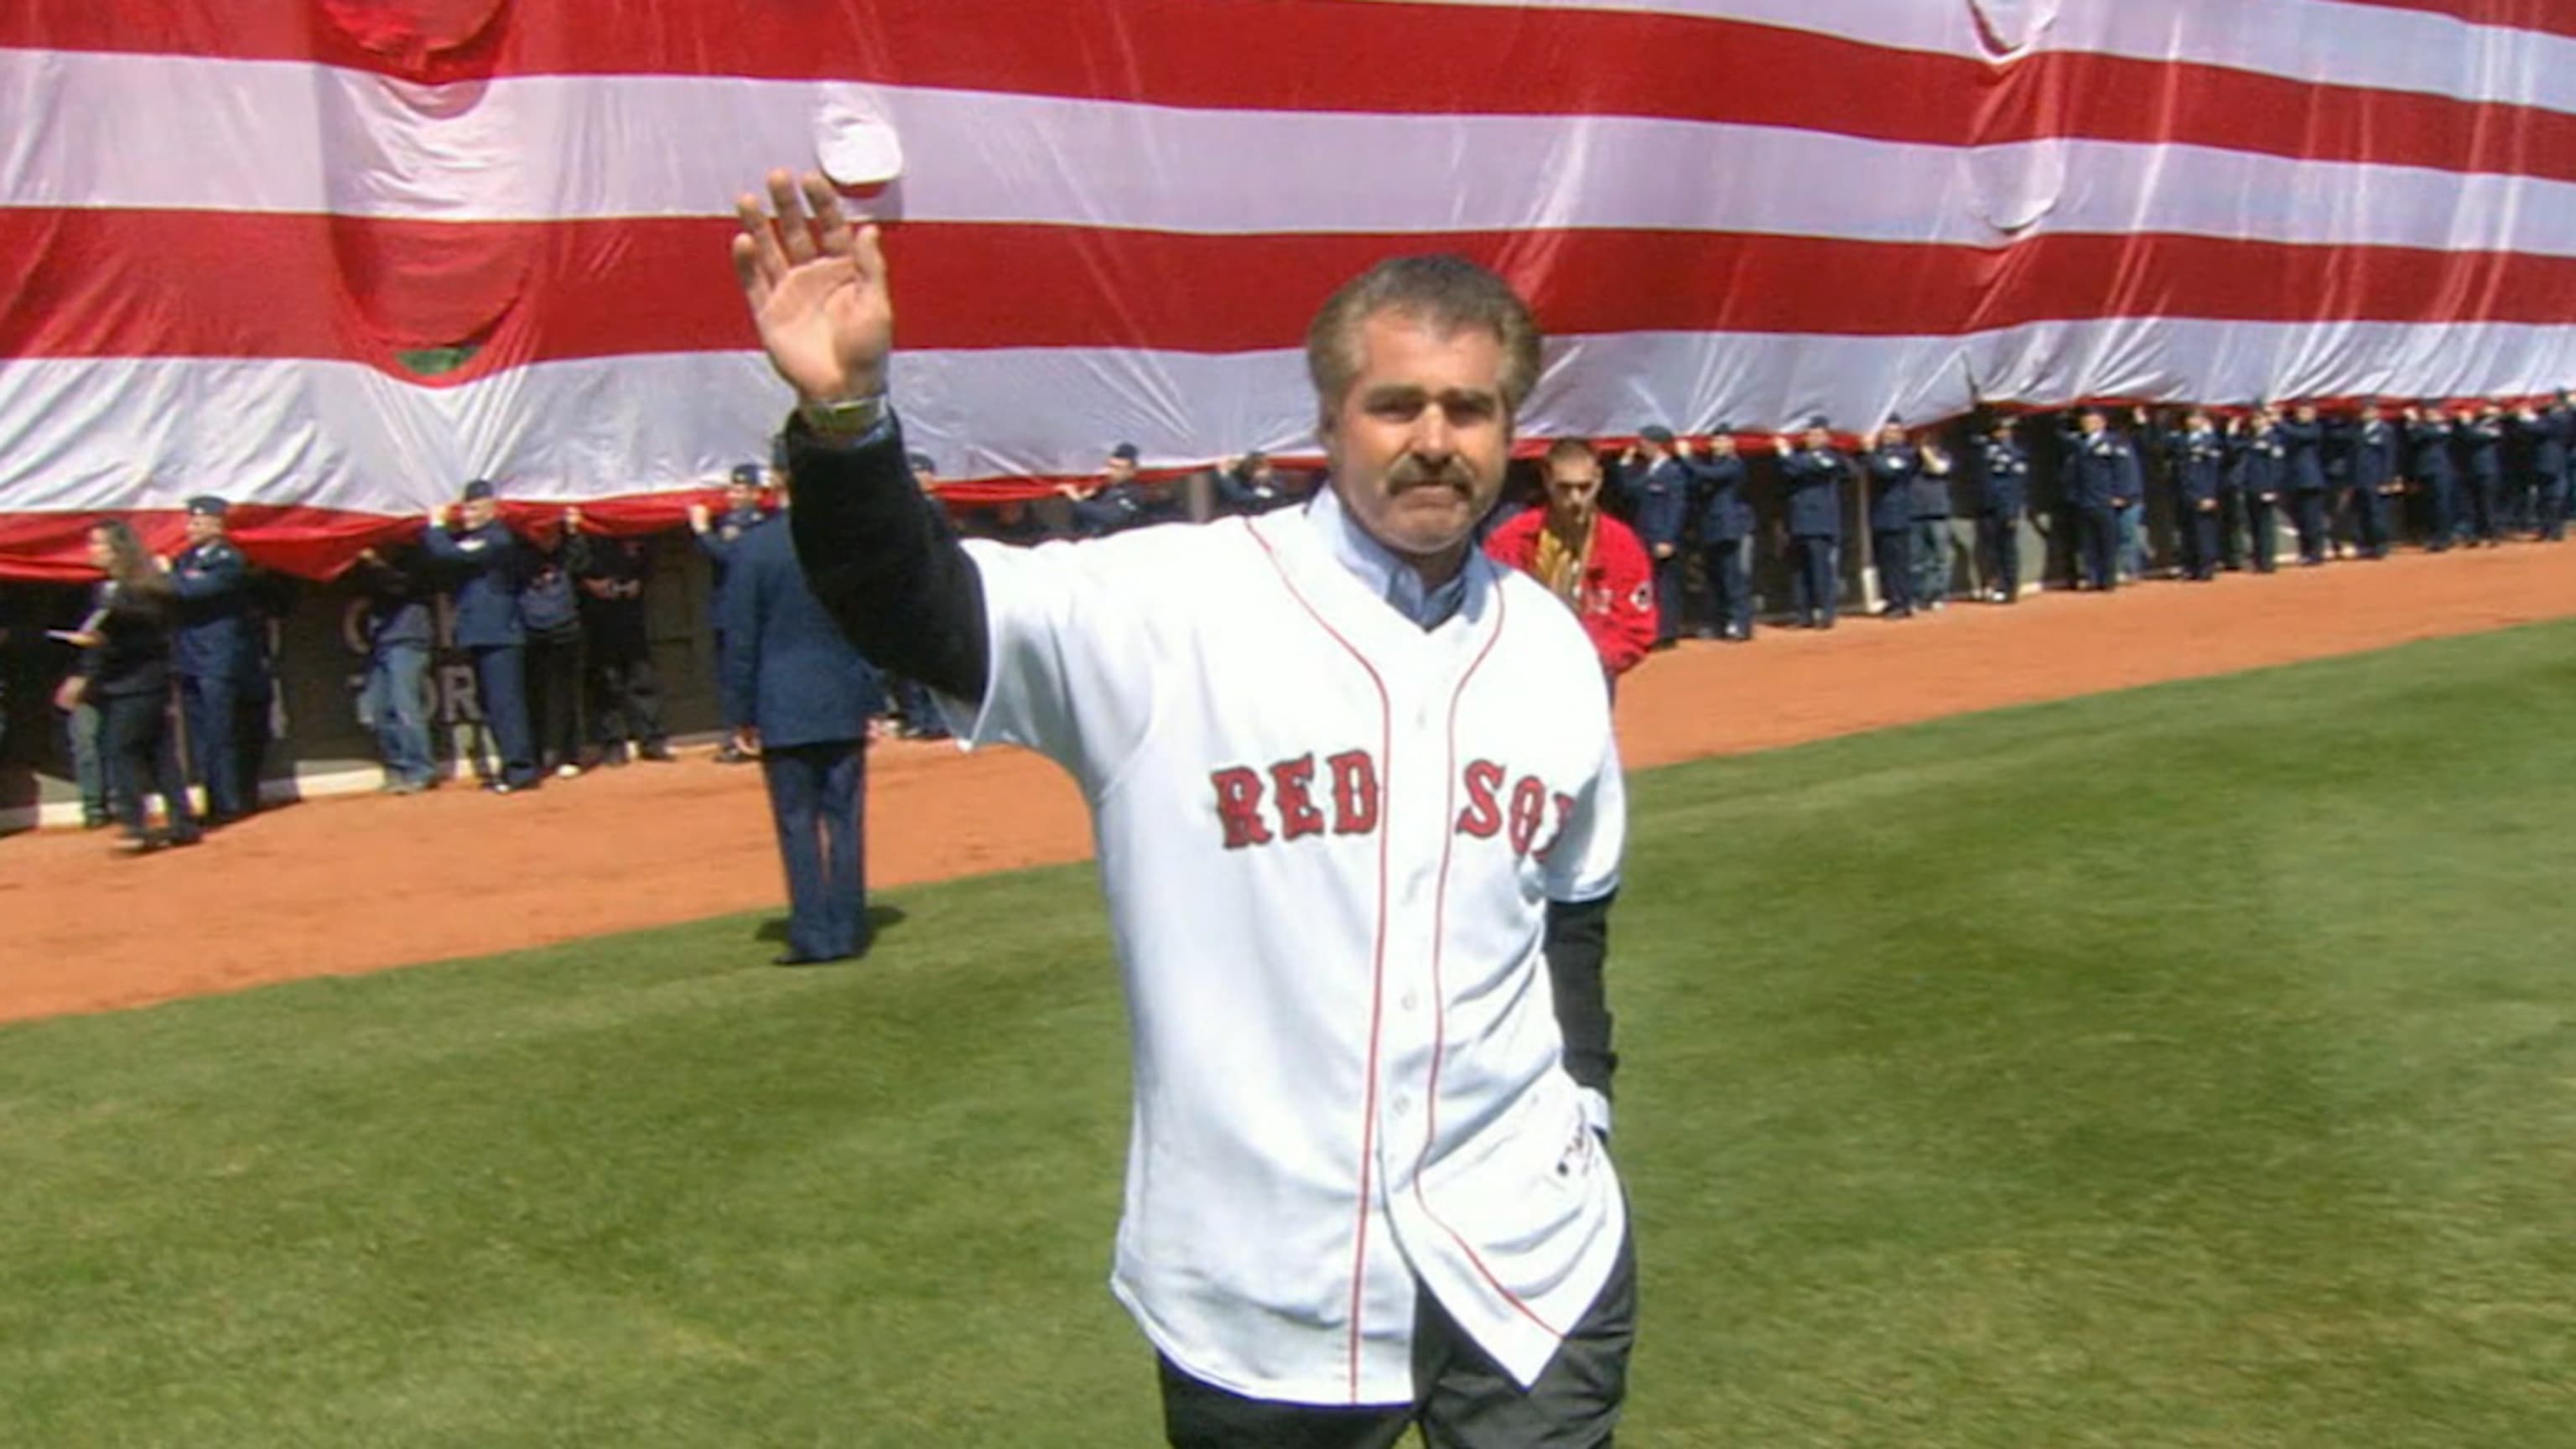 Red Sox legend Bill Buckner dies at age 69 from dementia